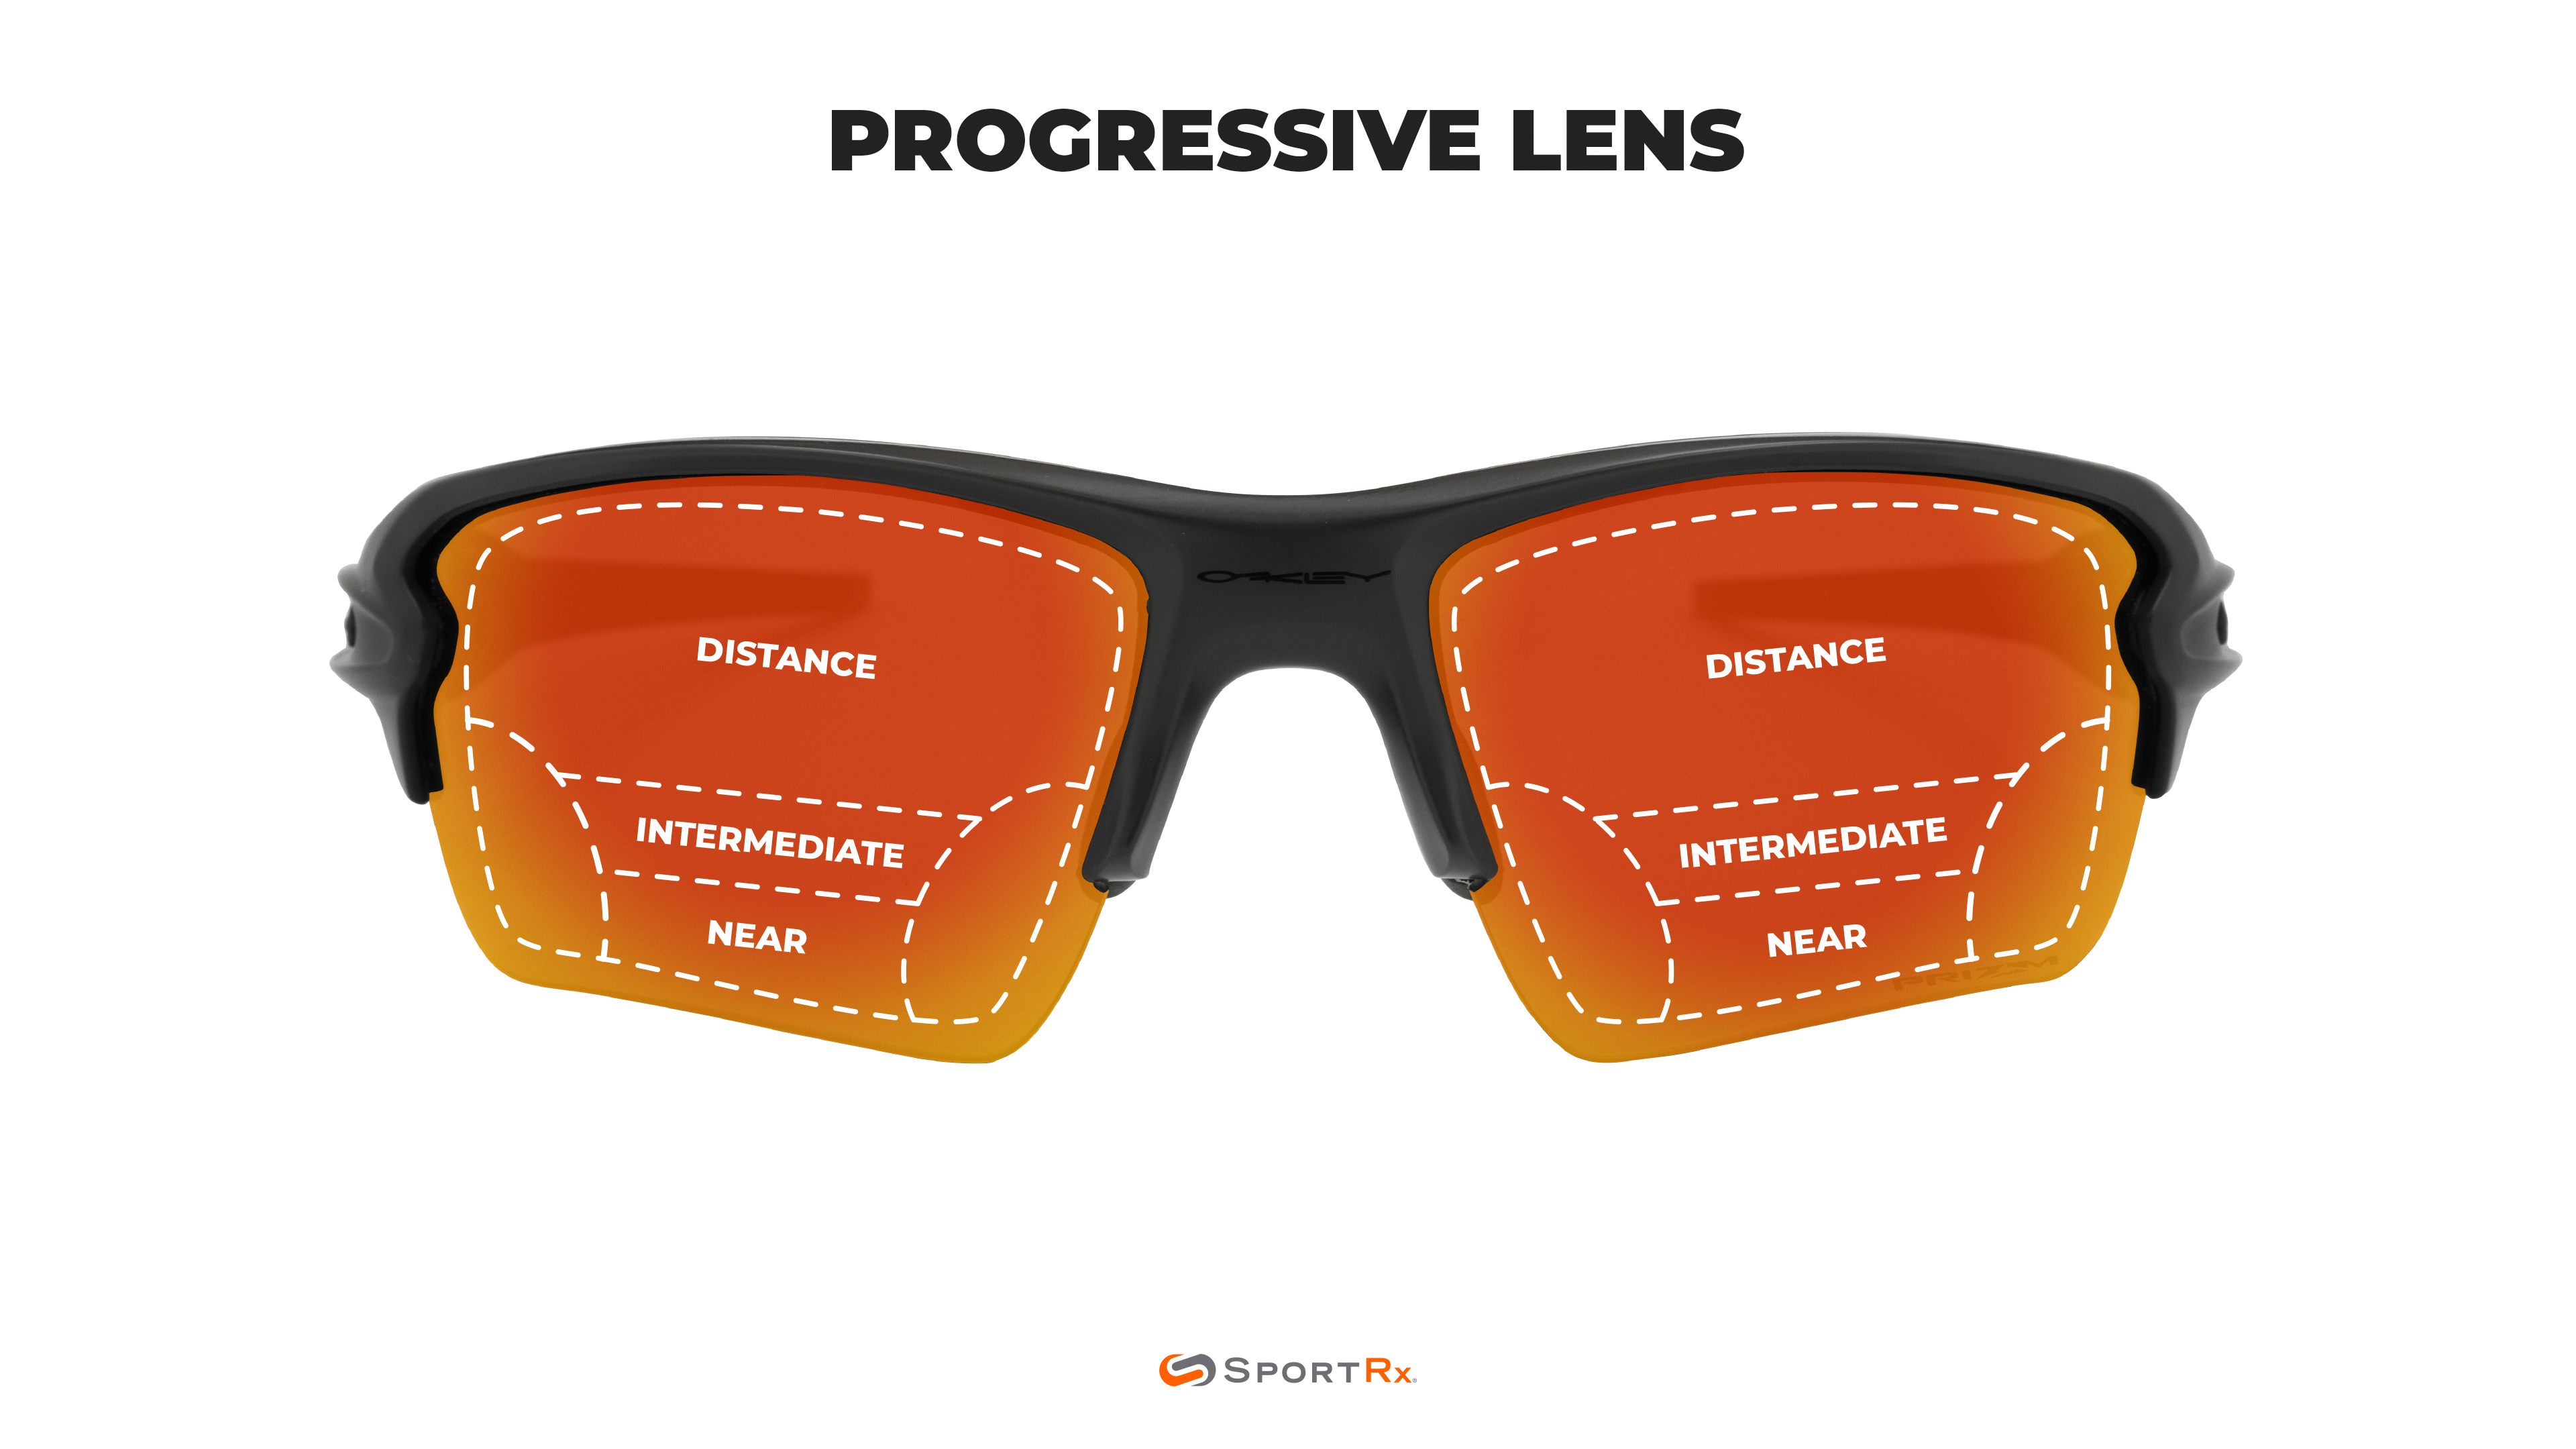 Are Progressive Lenses Good for Driving? | SportRx